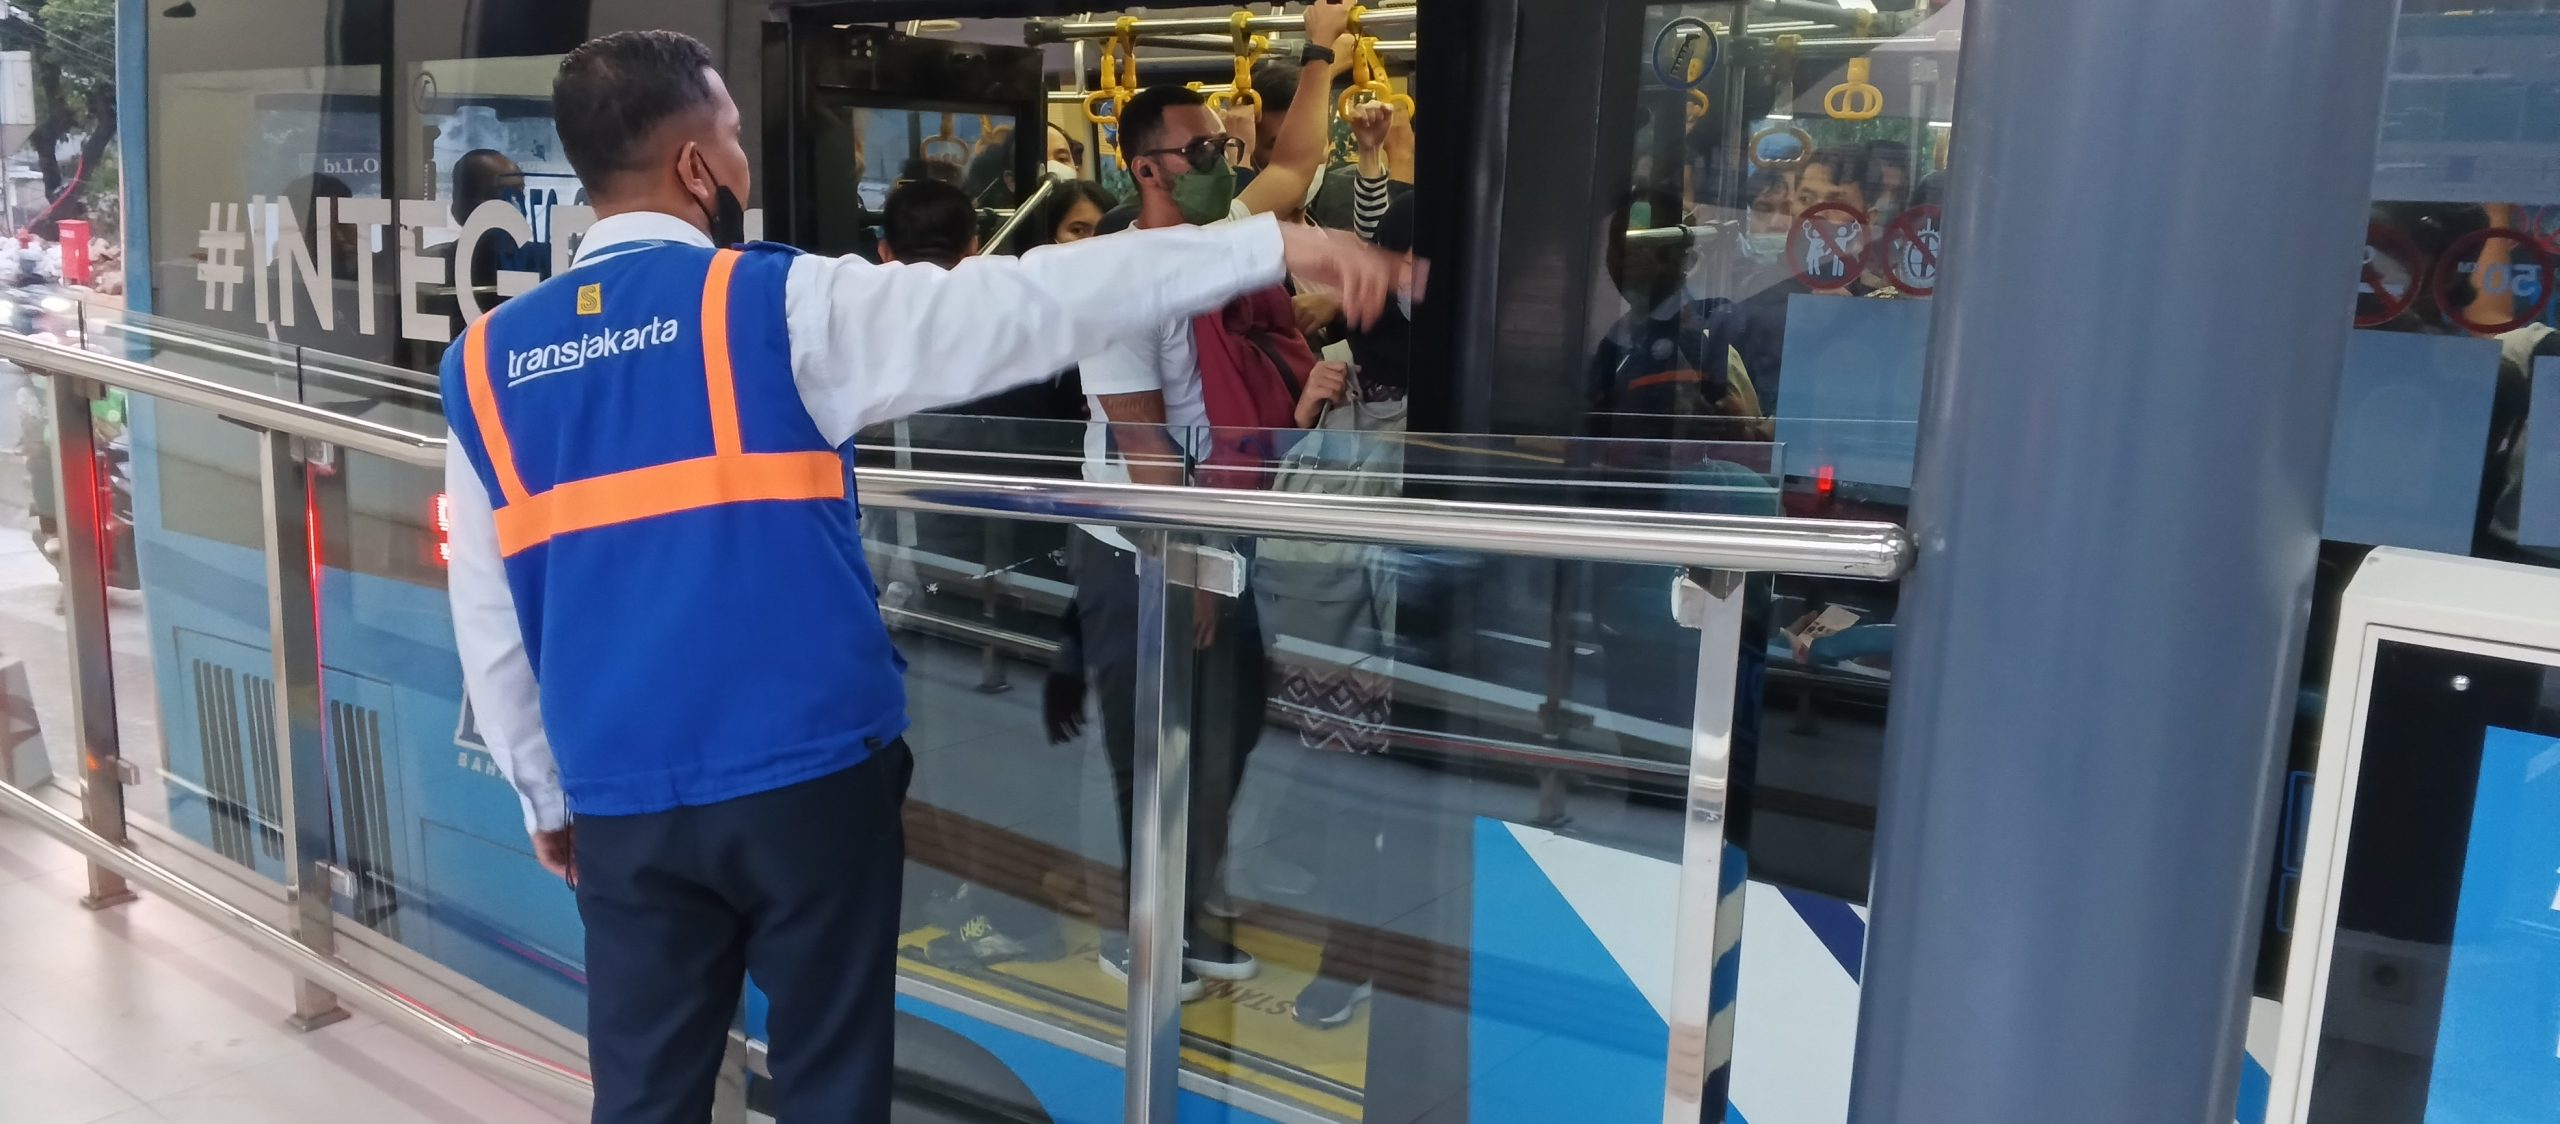 Pramusapa TransJakarta (dahulu bernama PLH/ Petugas Layanan Halte) yang menginstruksikan penumpang yang ingin turun di Halte Cikoko Stasiun Cawang arah timur agar berpindah ke pintu baris kedua bus gandeng Zhongtong | Foto: RED/Adrian Falah Diratama